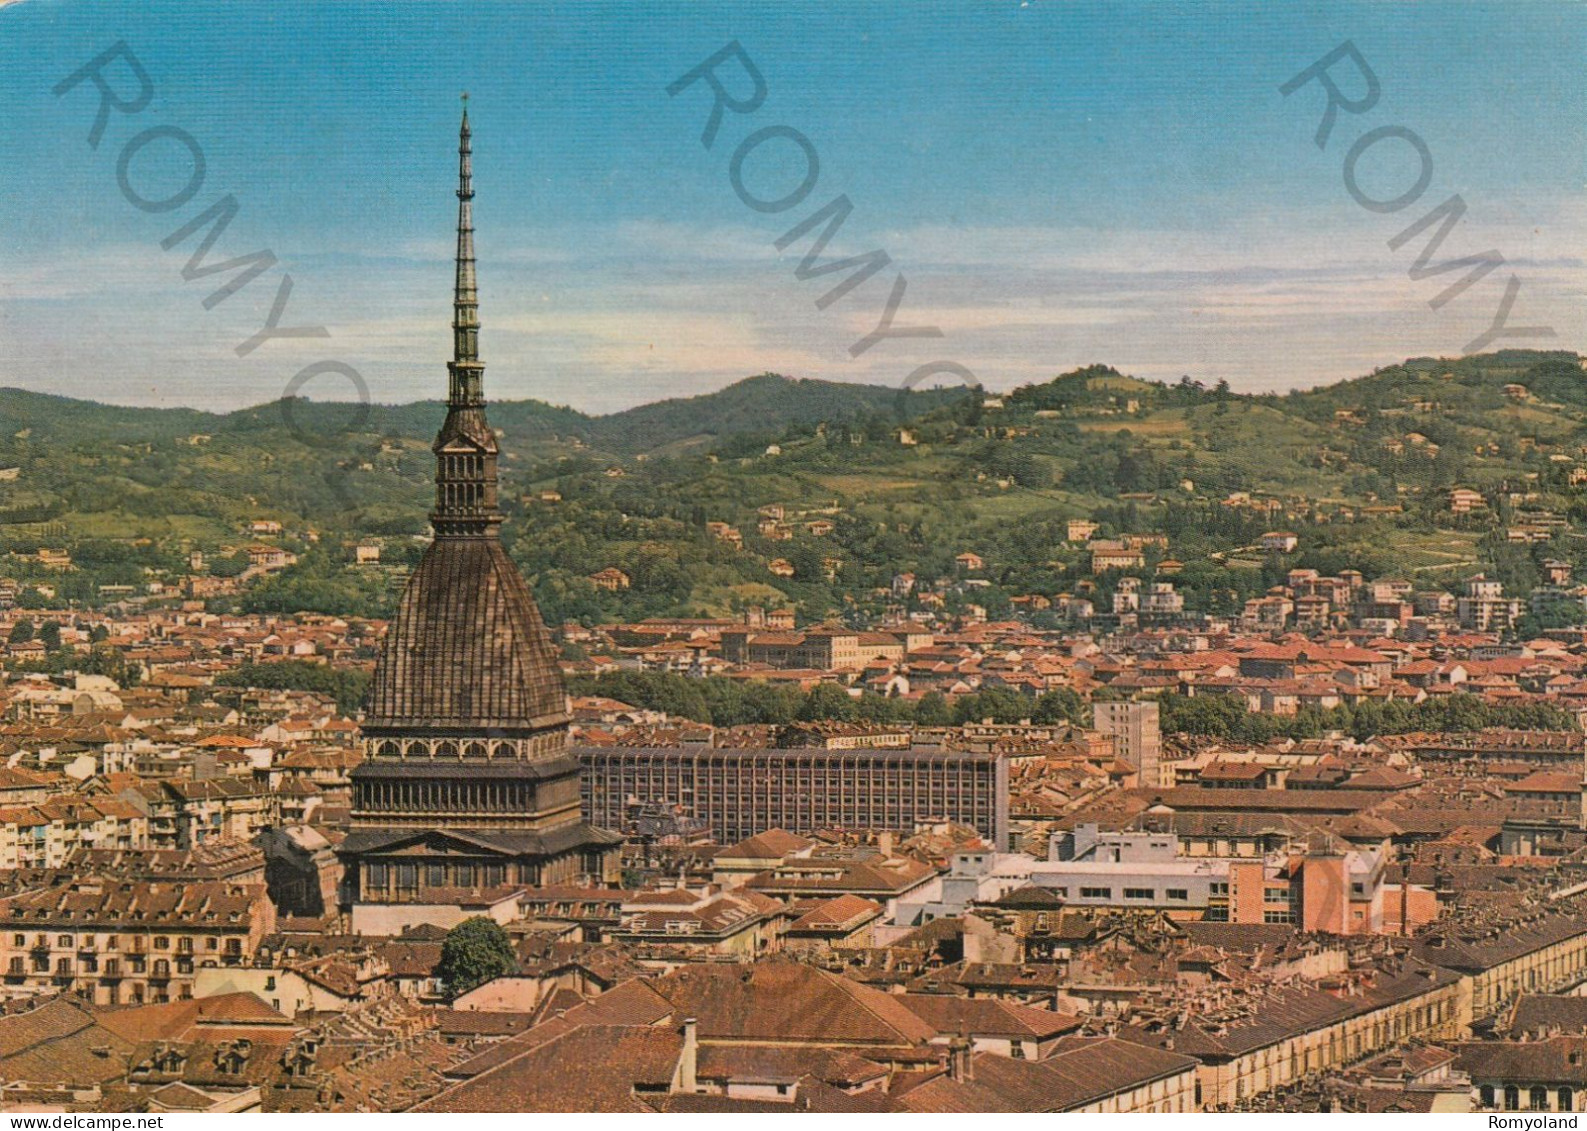 CARTOLINA  TORINO,PIEMONTE-PANORAMA-STORIA,MEMORIA,CULTURA,RELIGIONE,IMPERO ROMANO,BELLA ITALIA,VIAGGIATA 1983 - Panoramic Views